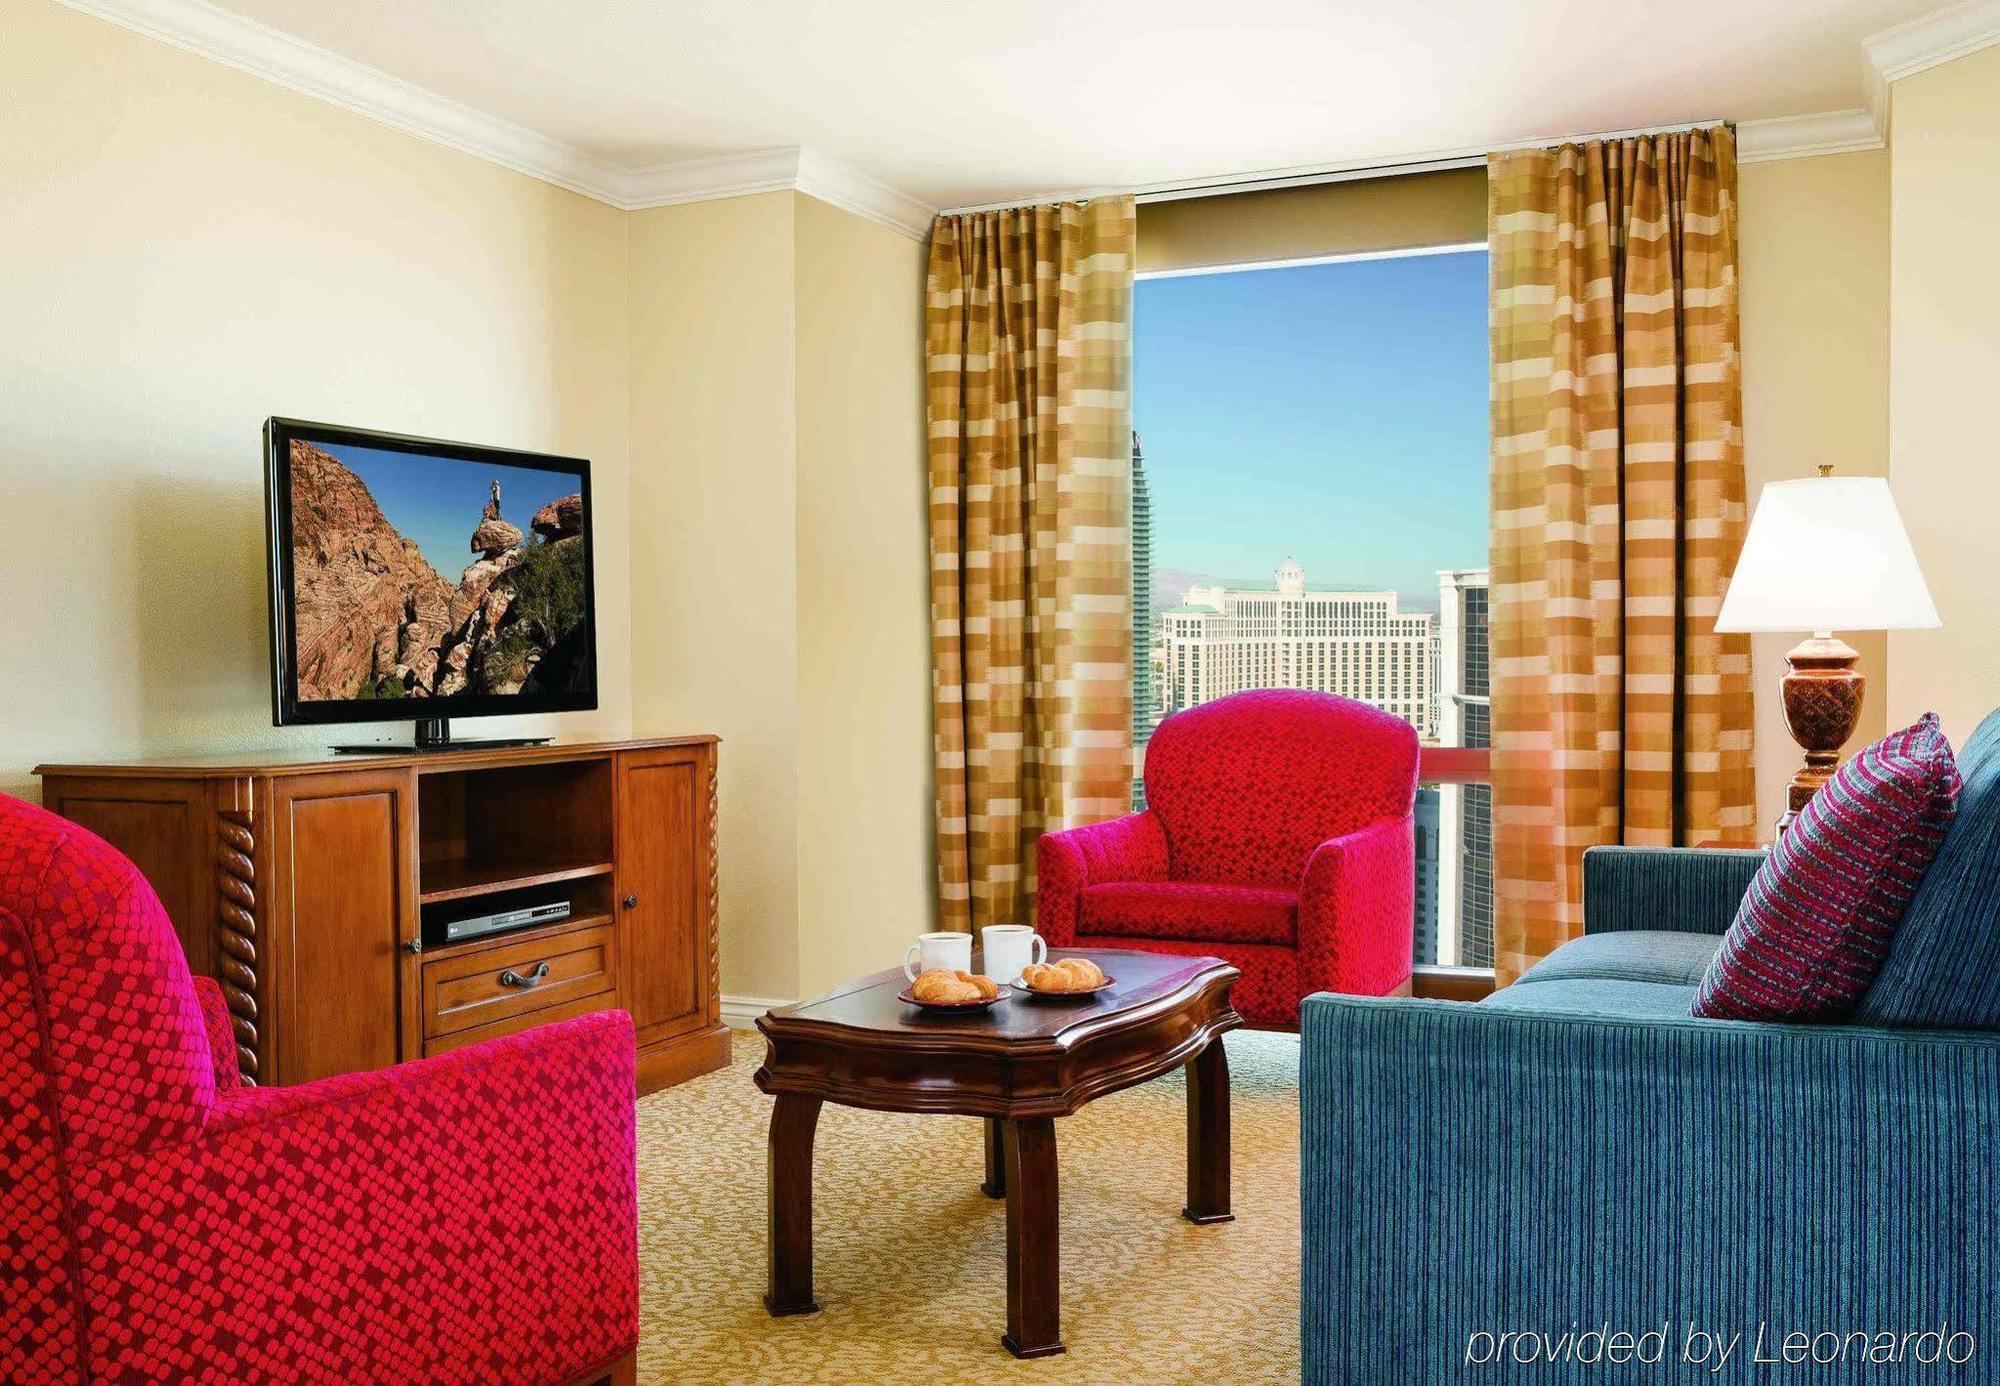 Marriott Grand Chateau One Bedroom Villa Room Tour - Las Vegas